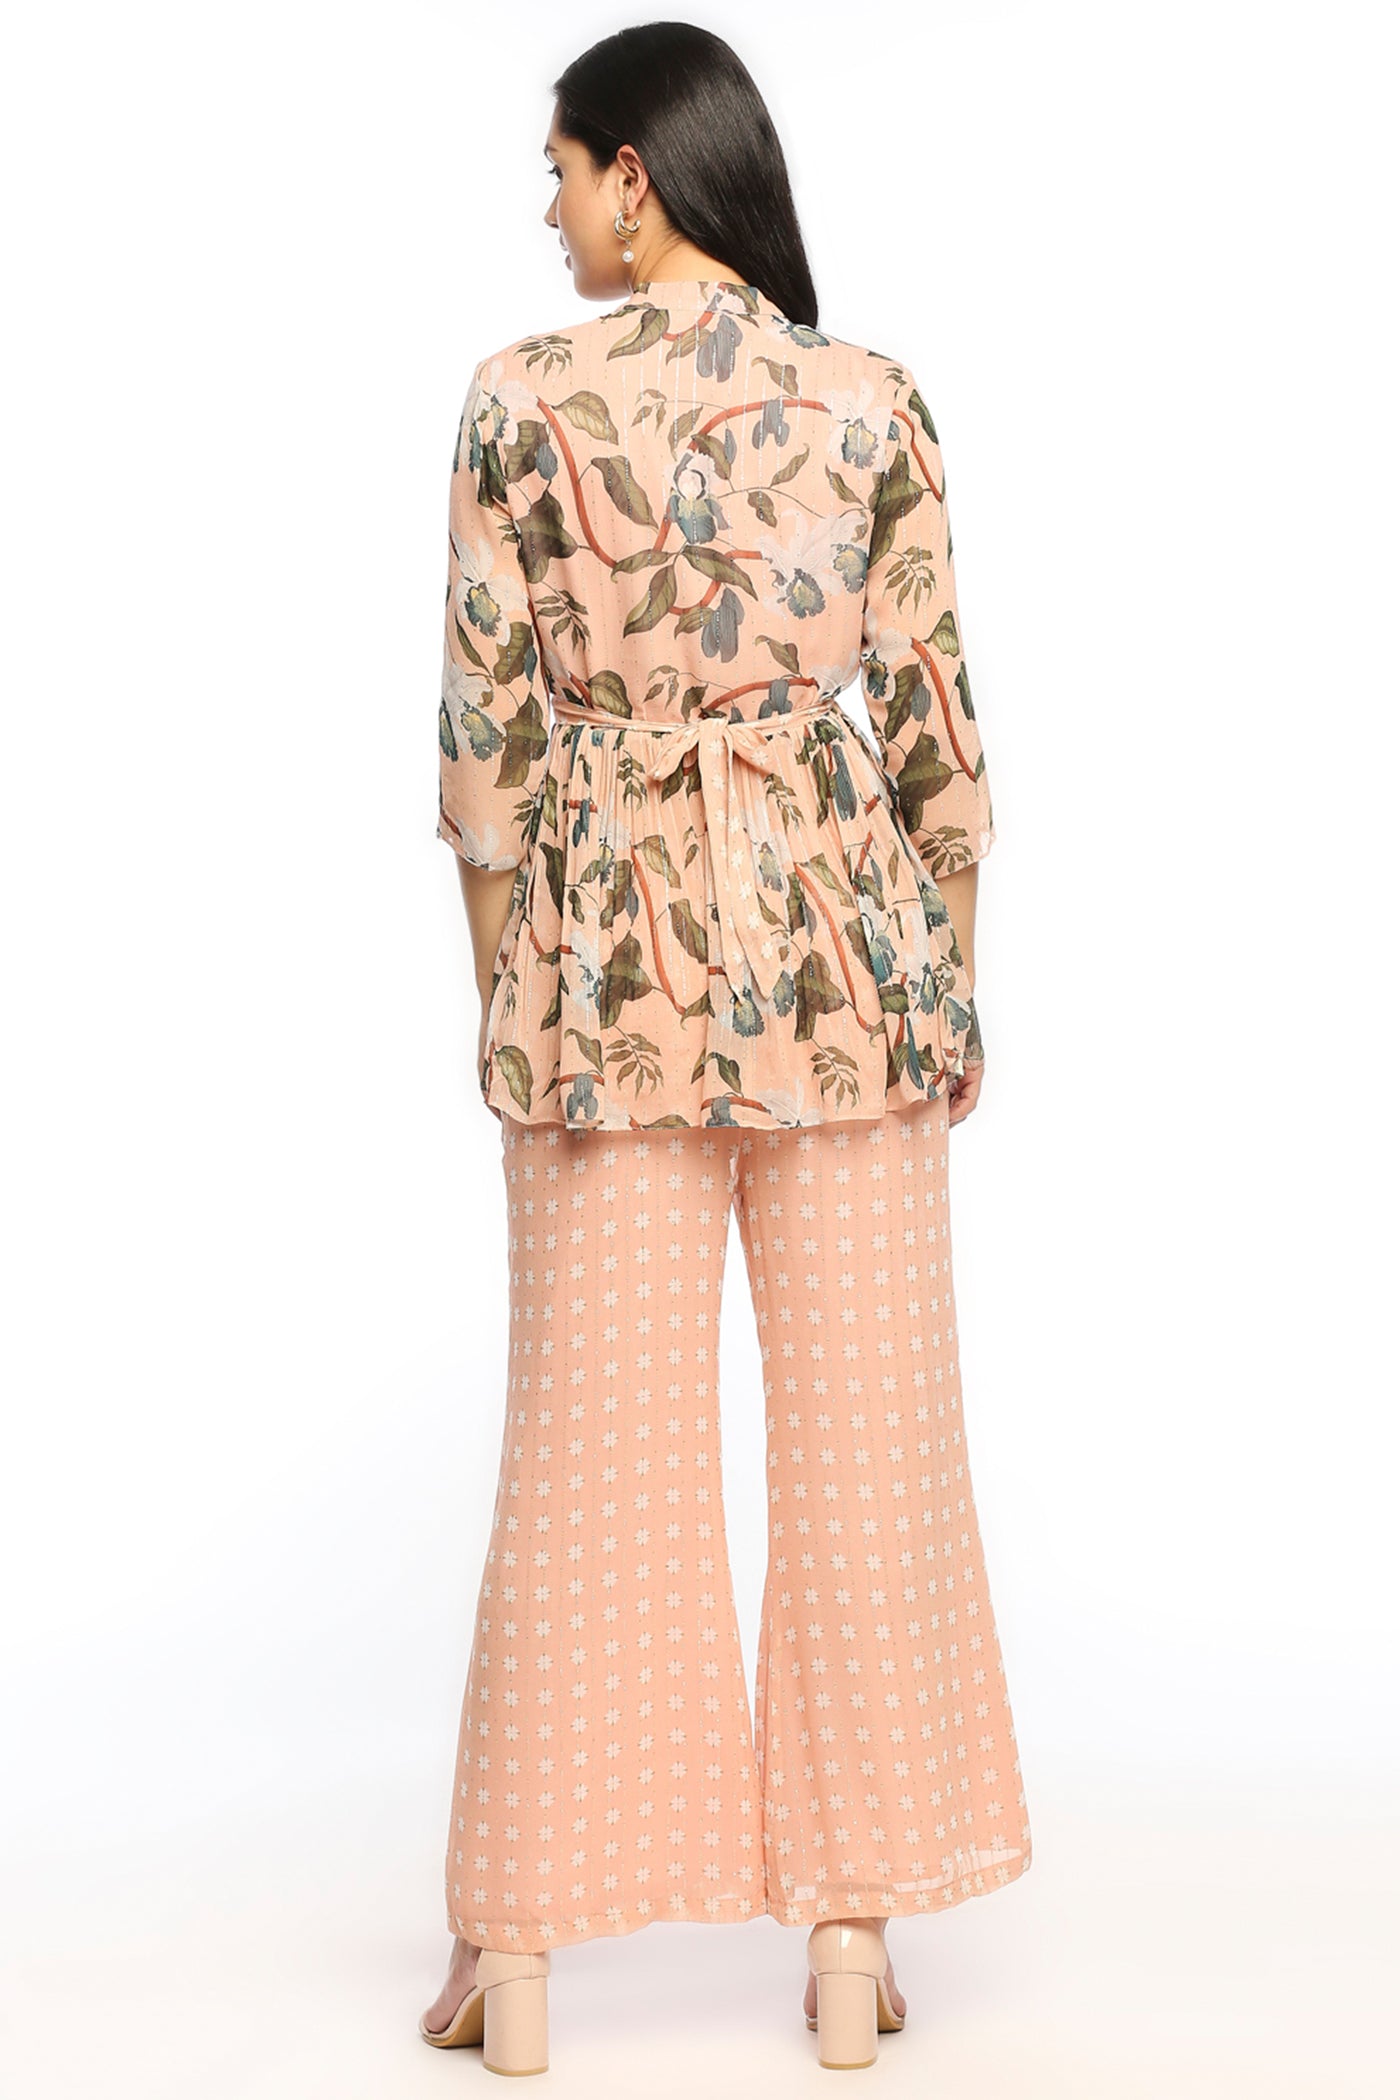 Sougat Paul Orchid Bloom Printed Pant Set With Belt peach western indian designer wear online shopping melange singapore